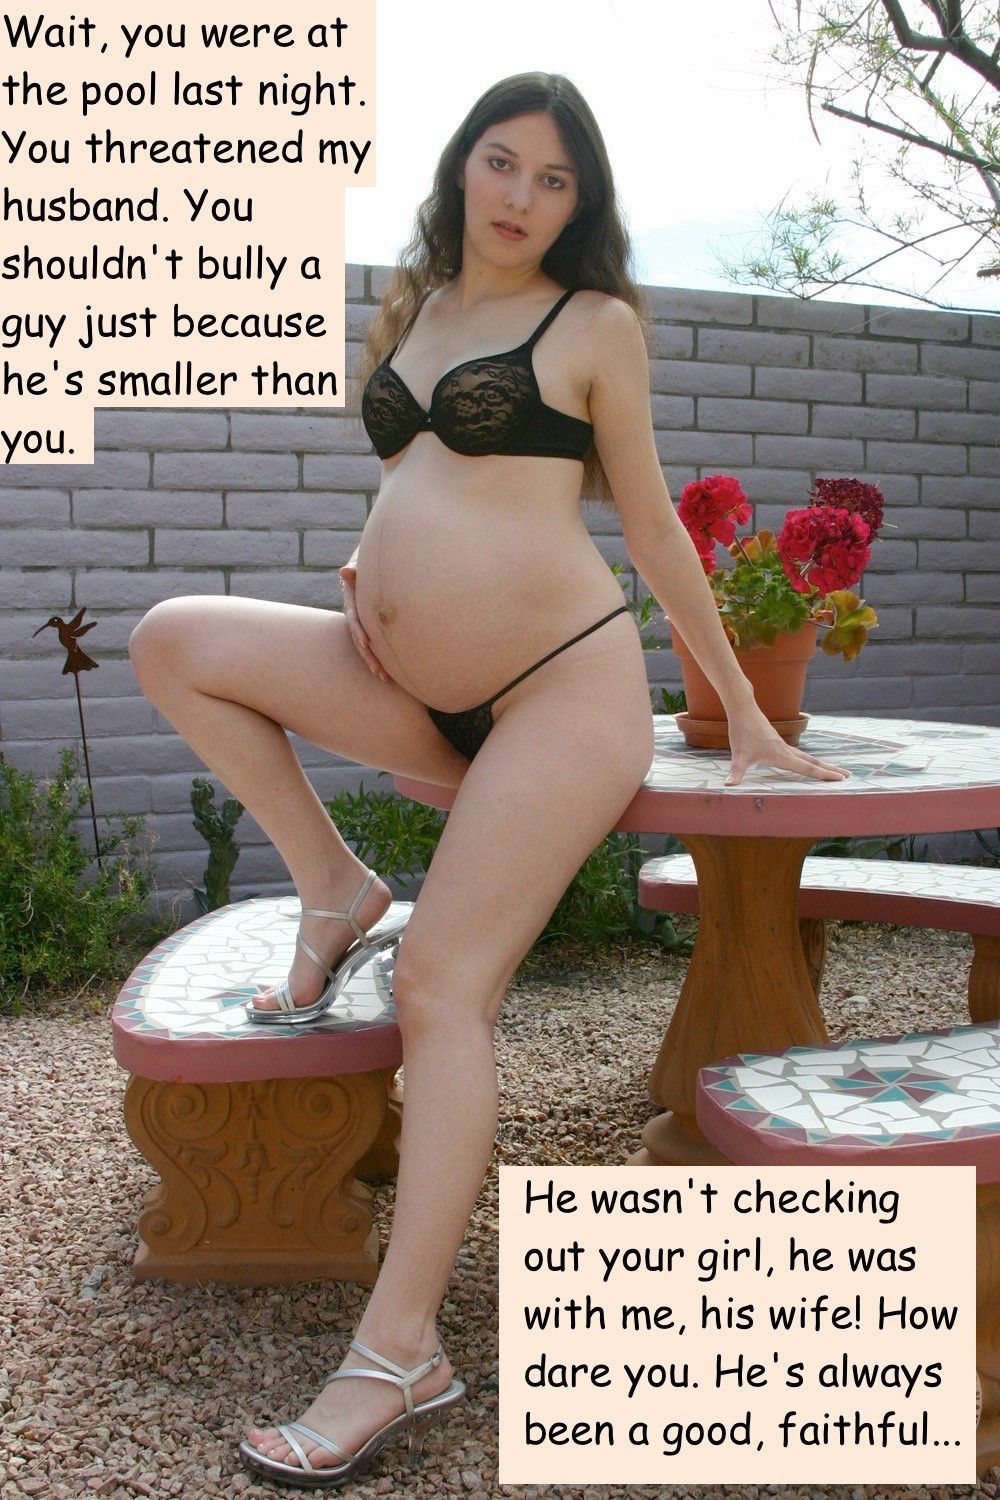 Interracial pregnancy stories